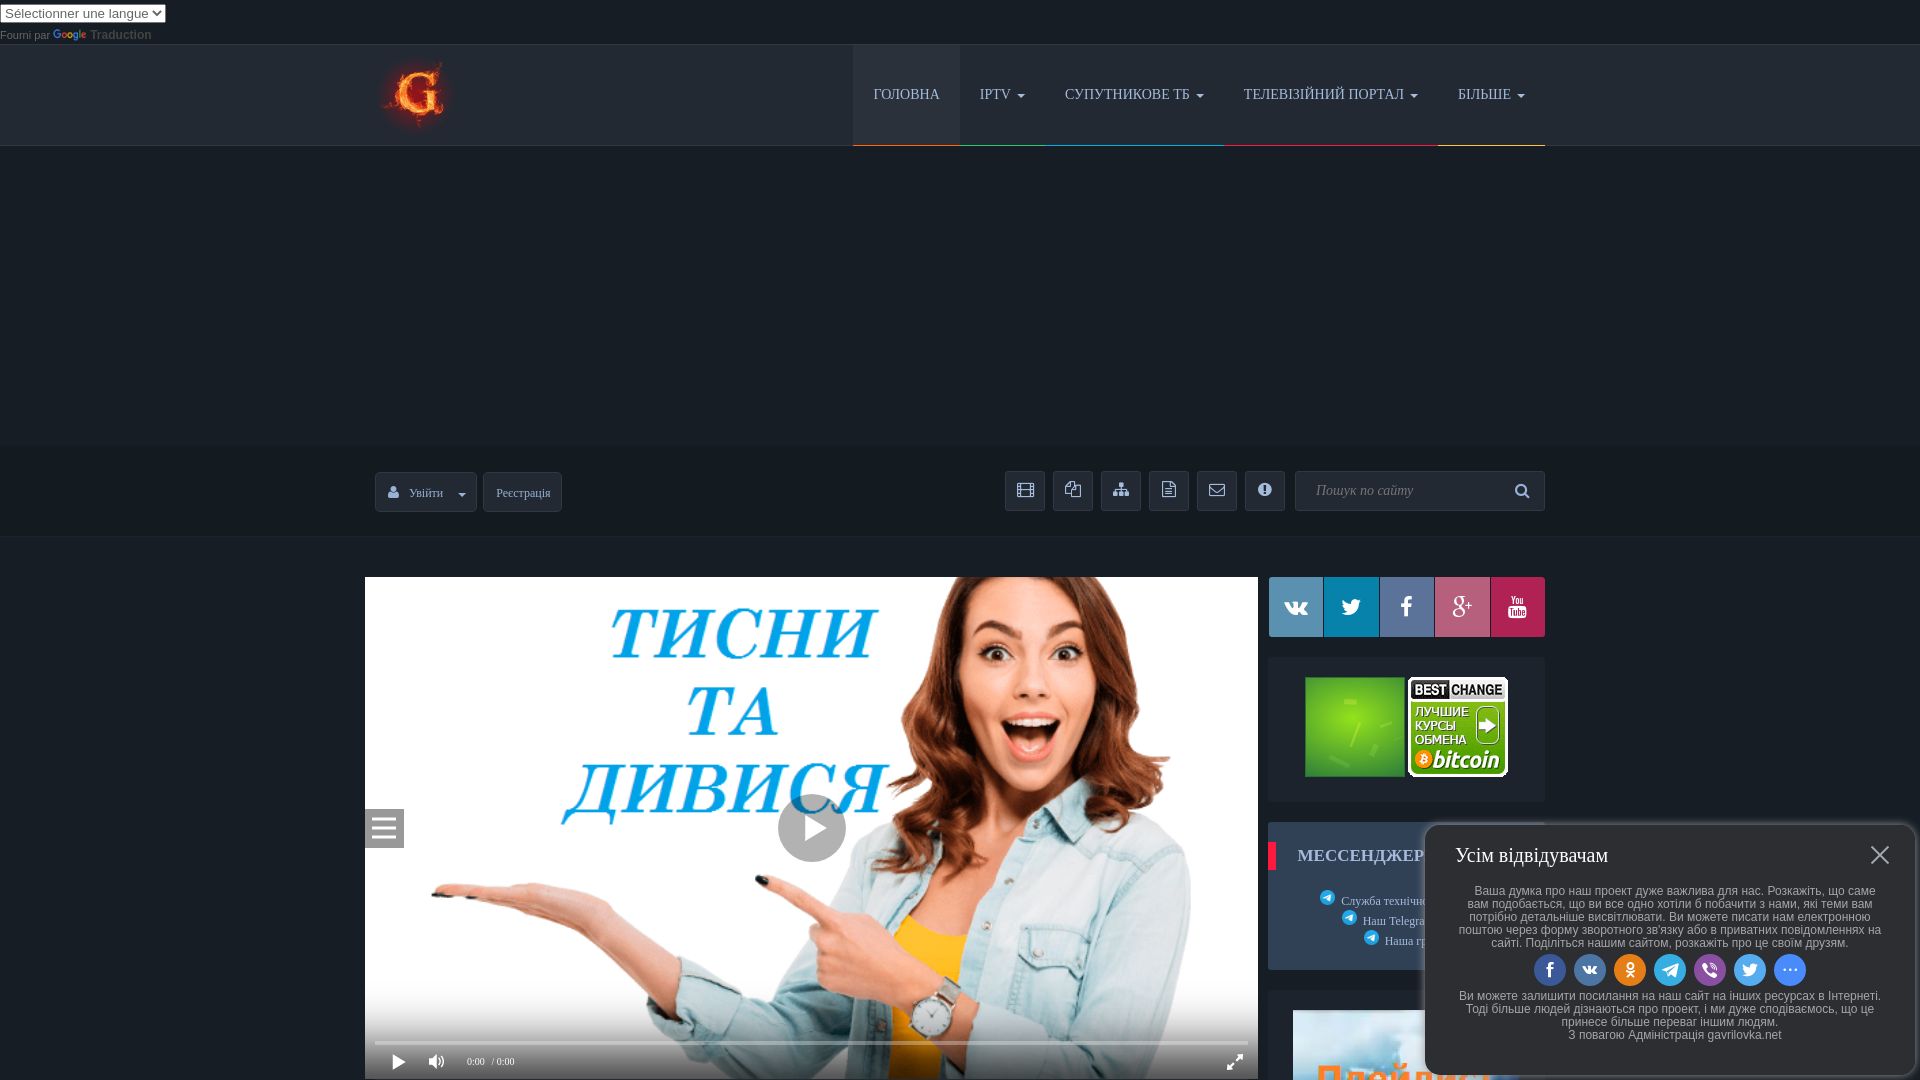 Website status gavrilovka.net is   ONLINE